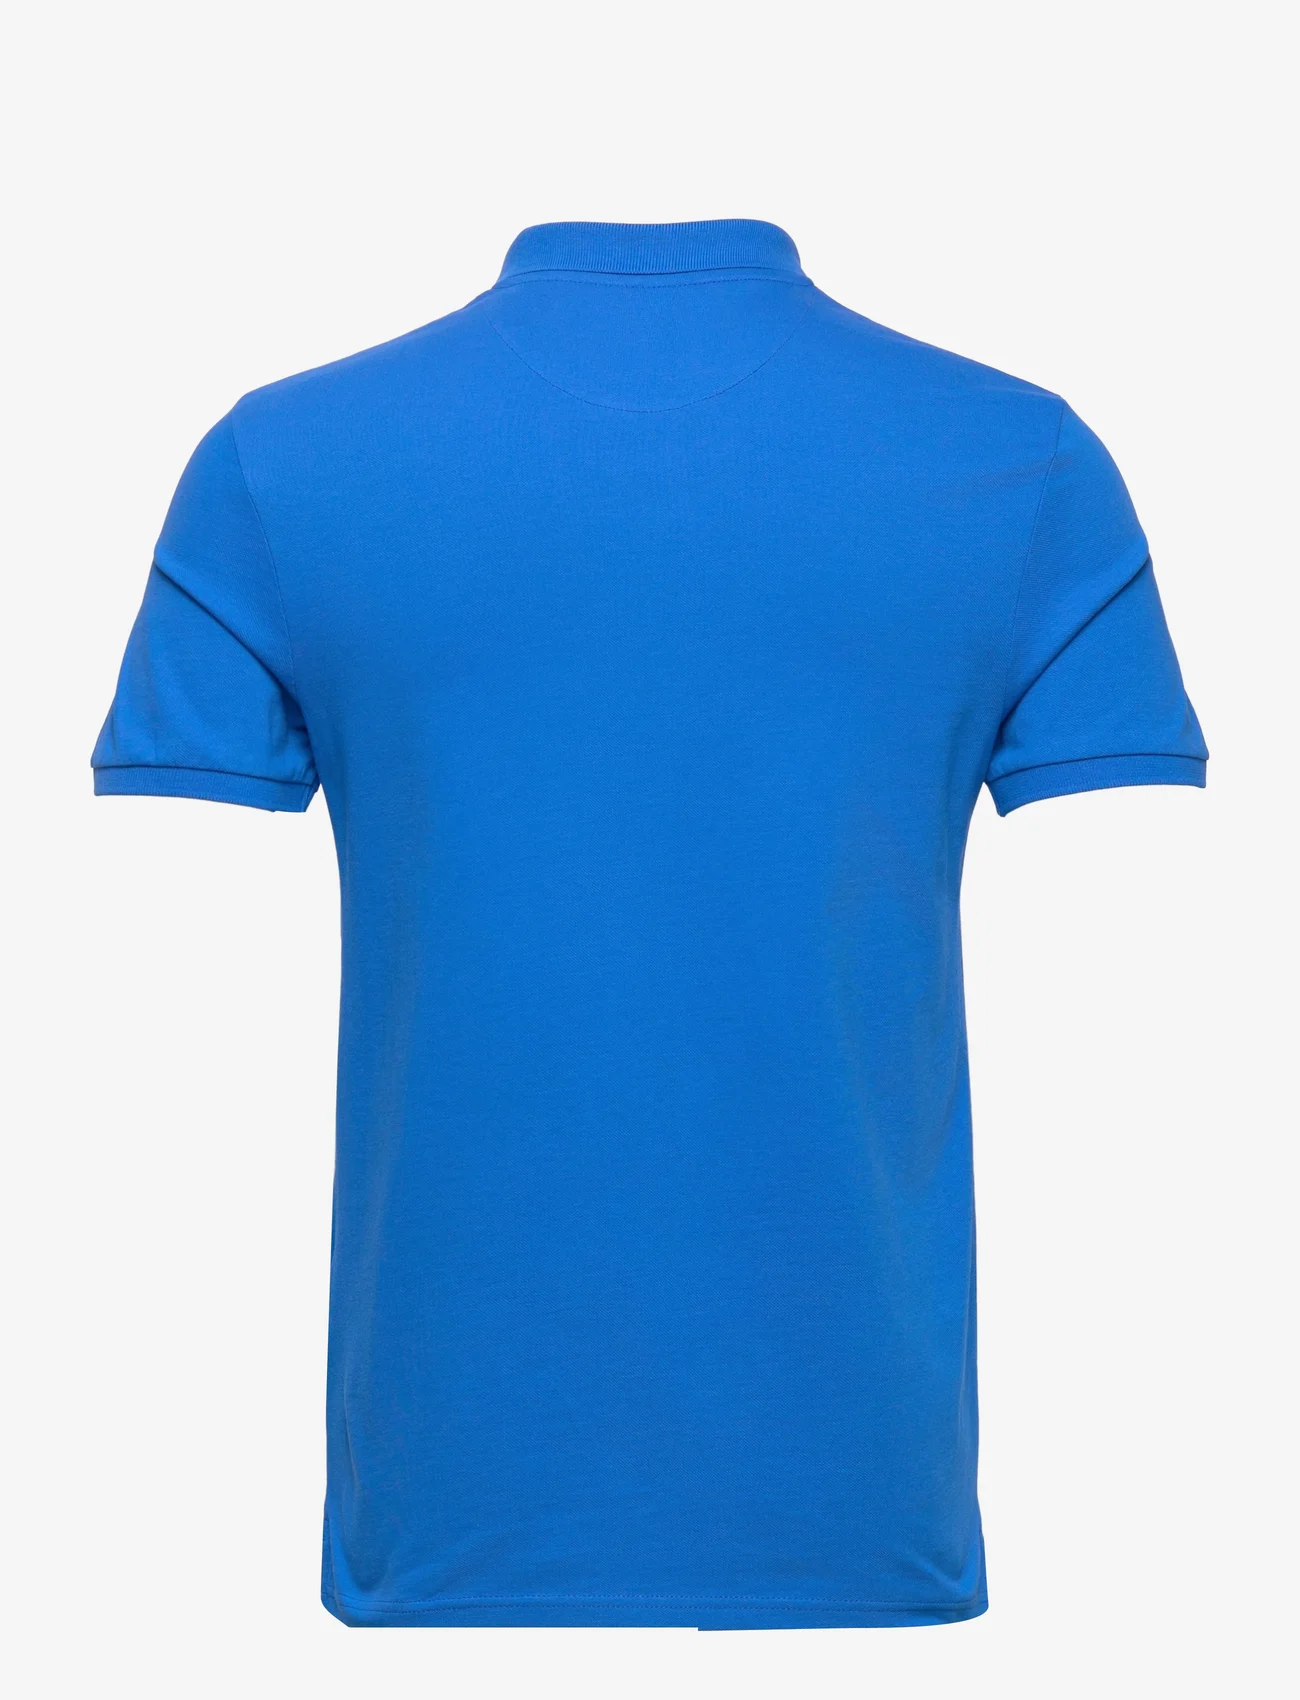 Lyle & Scott - Plain Polo Shirt - lyhythihaiset - bright blue - 1